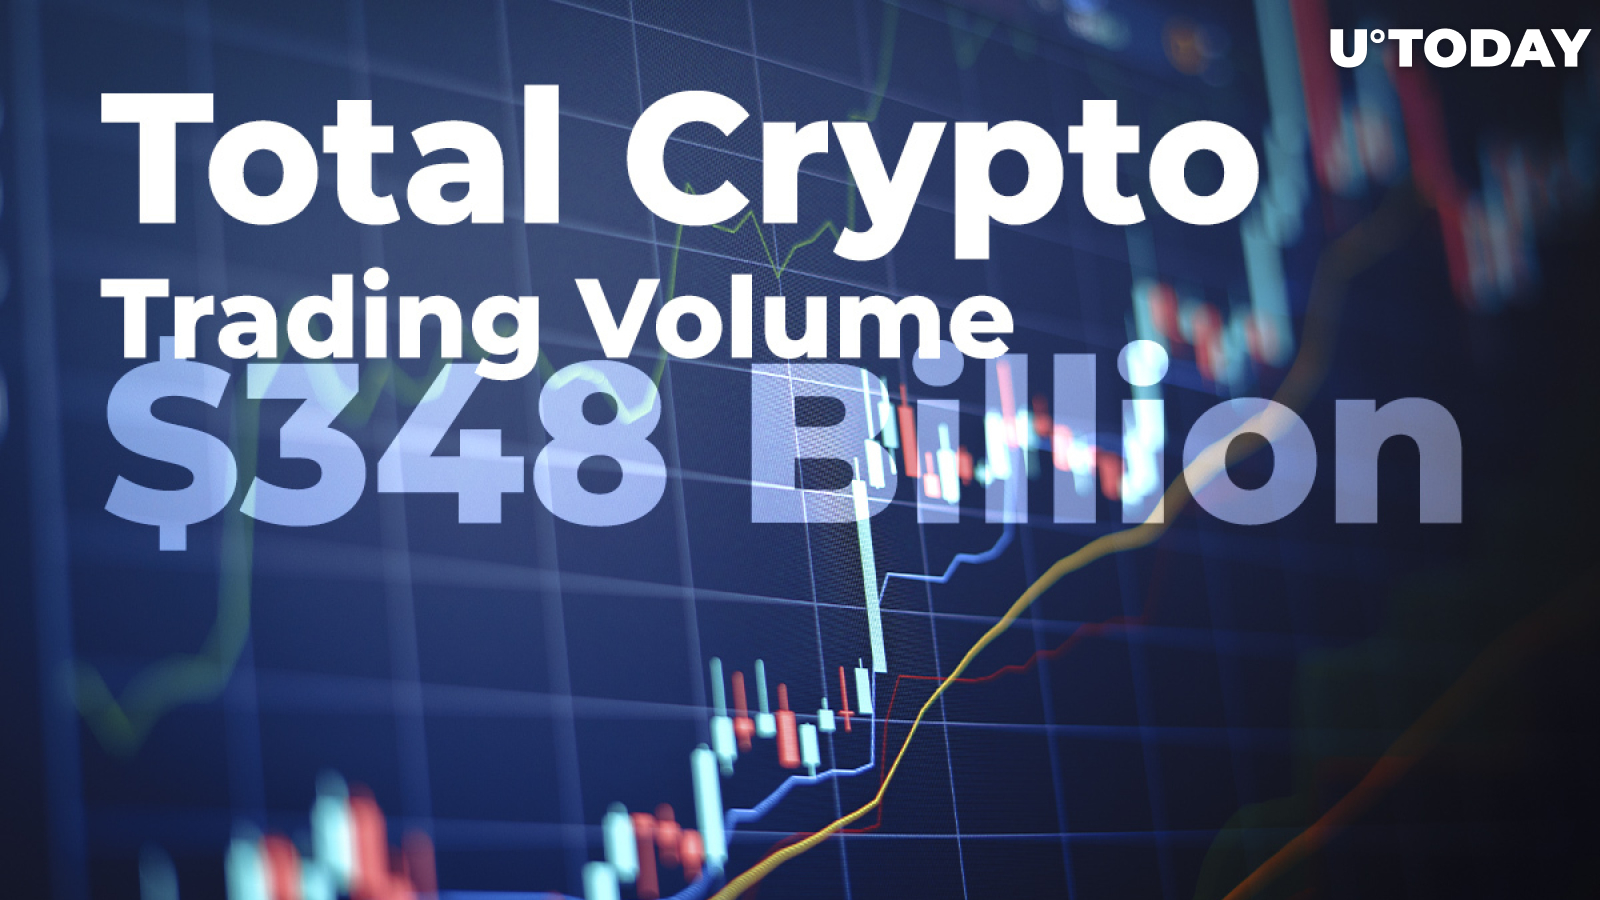 Total Crypto Trading Volume Hit Record $348 Billion Last Month: CoinGecko Data